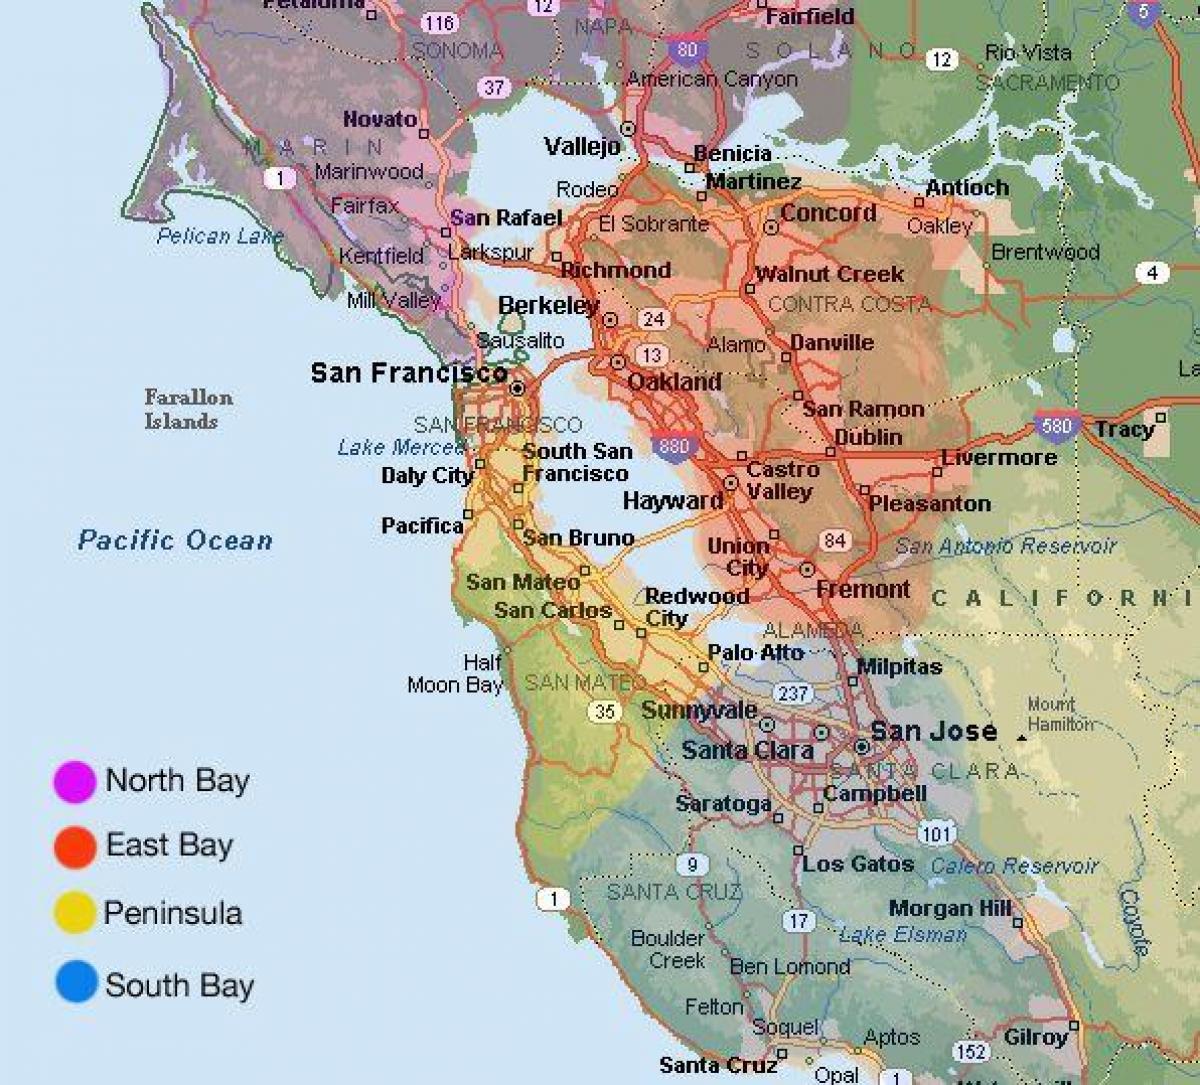 San Francisco-området kart og området rundt